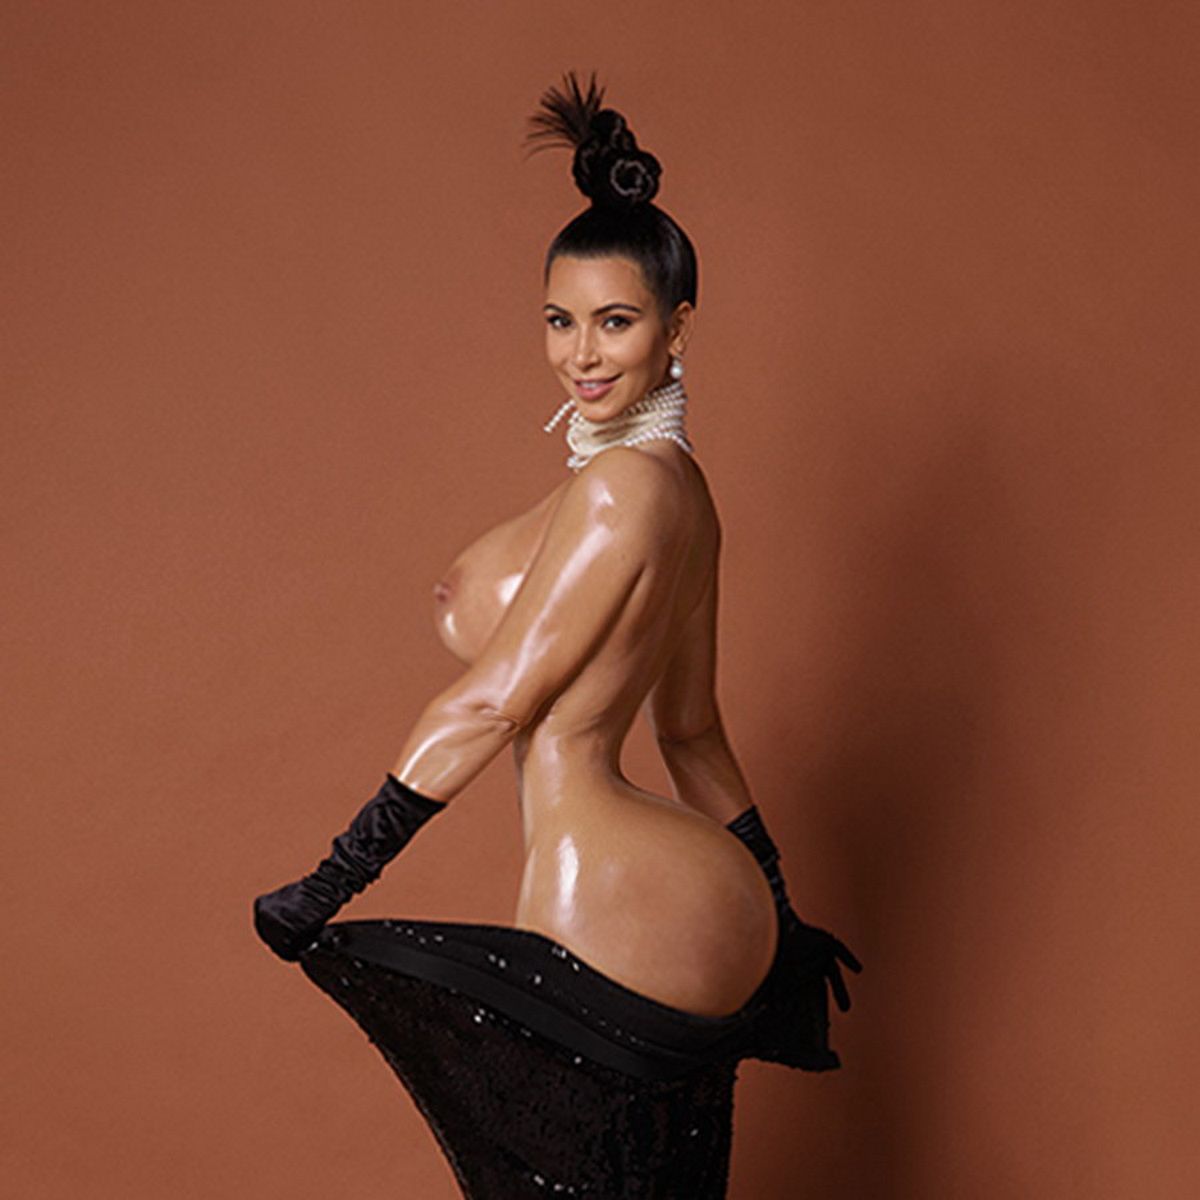 Kim Kardashian Big Tits Porn - IMGBOC.COM - Kim Kardashian nude Paper Magazine Cover show big boobs ass  and shaved pussy 6x HQ 3.jpg -